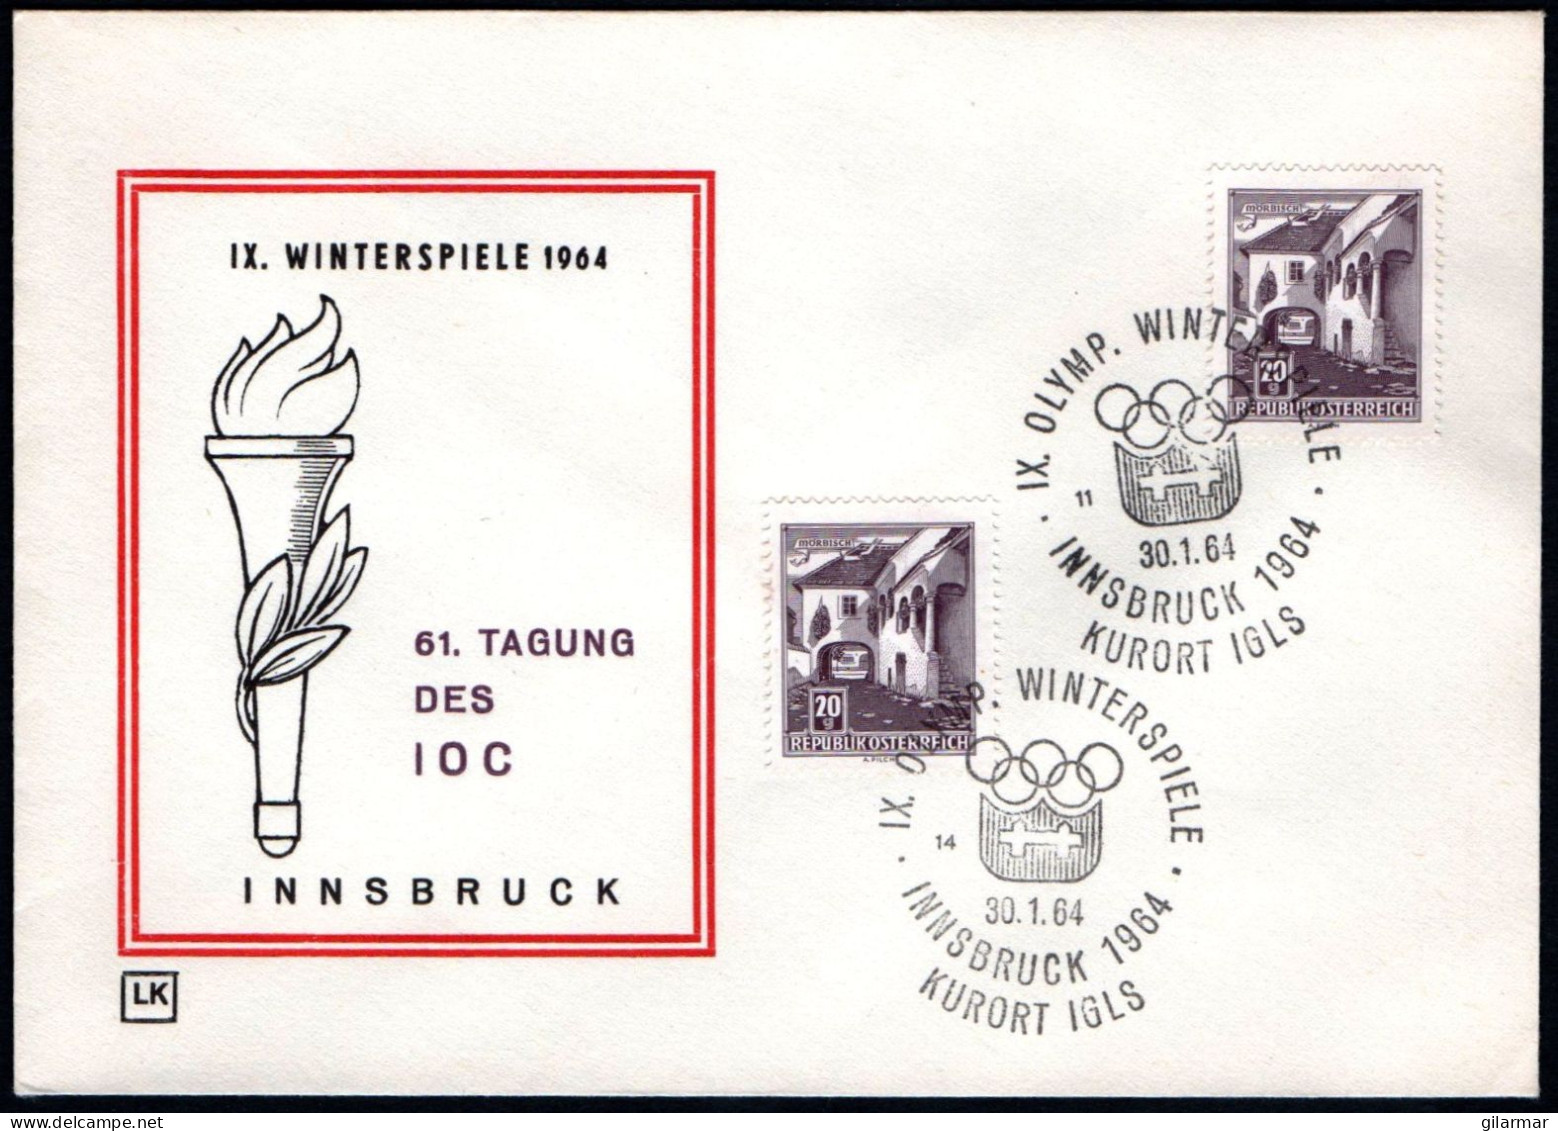 AUSTRIA KURORT IGLS 1964 - IX OLYMPIC WINTER GAMES - INNSBRUCK '64 - CANCELS # 14 & 11 - G - Invierno 1964: Innsbruck